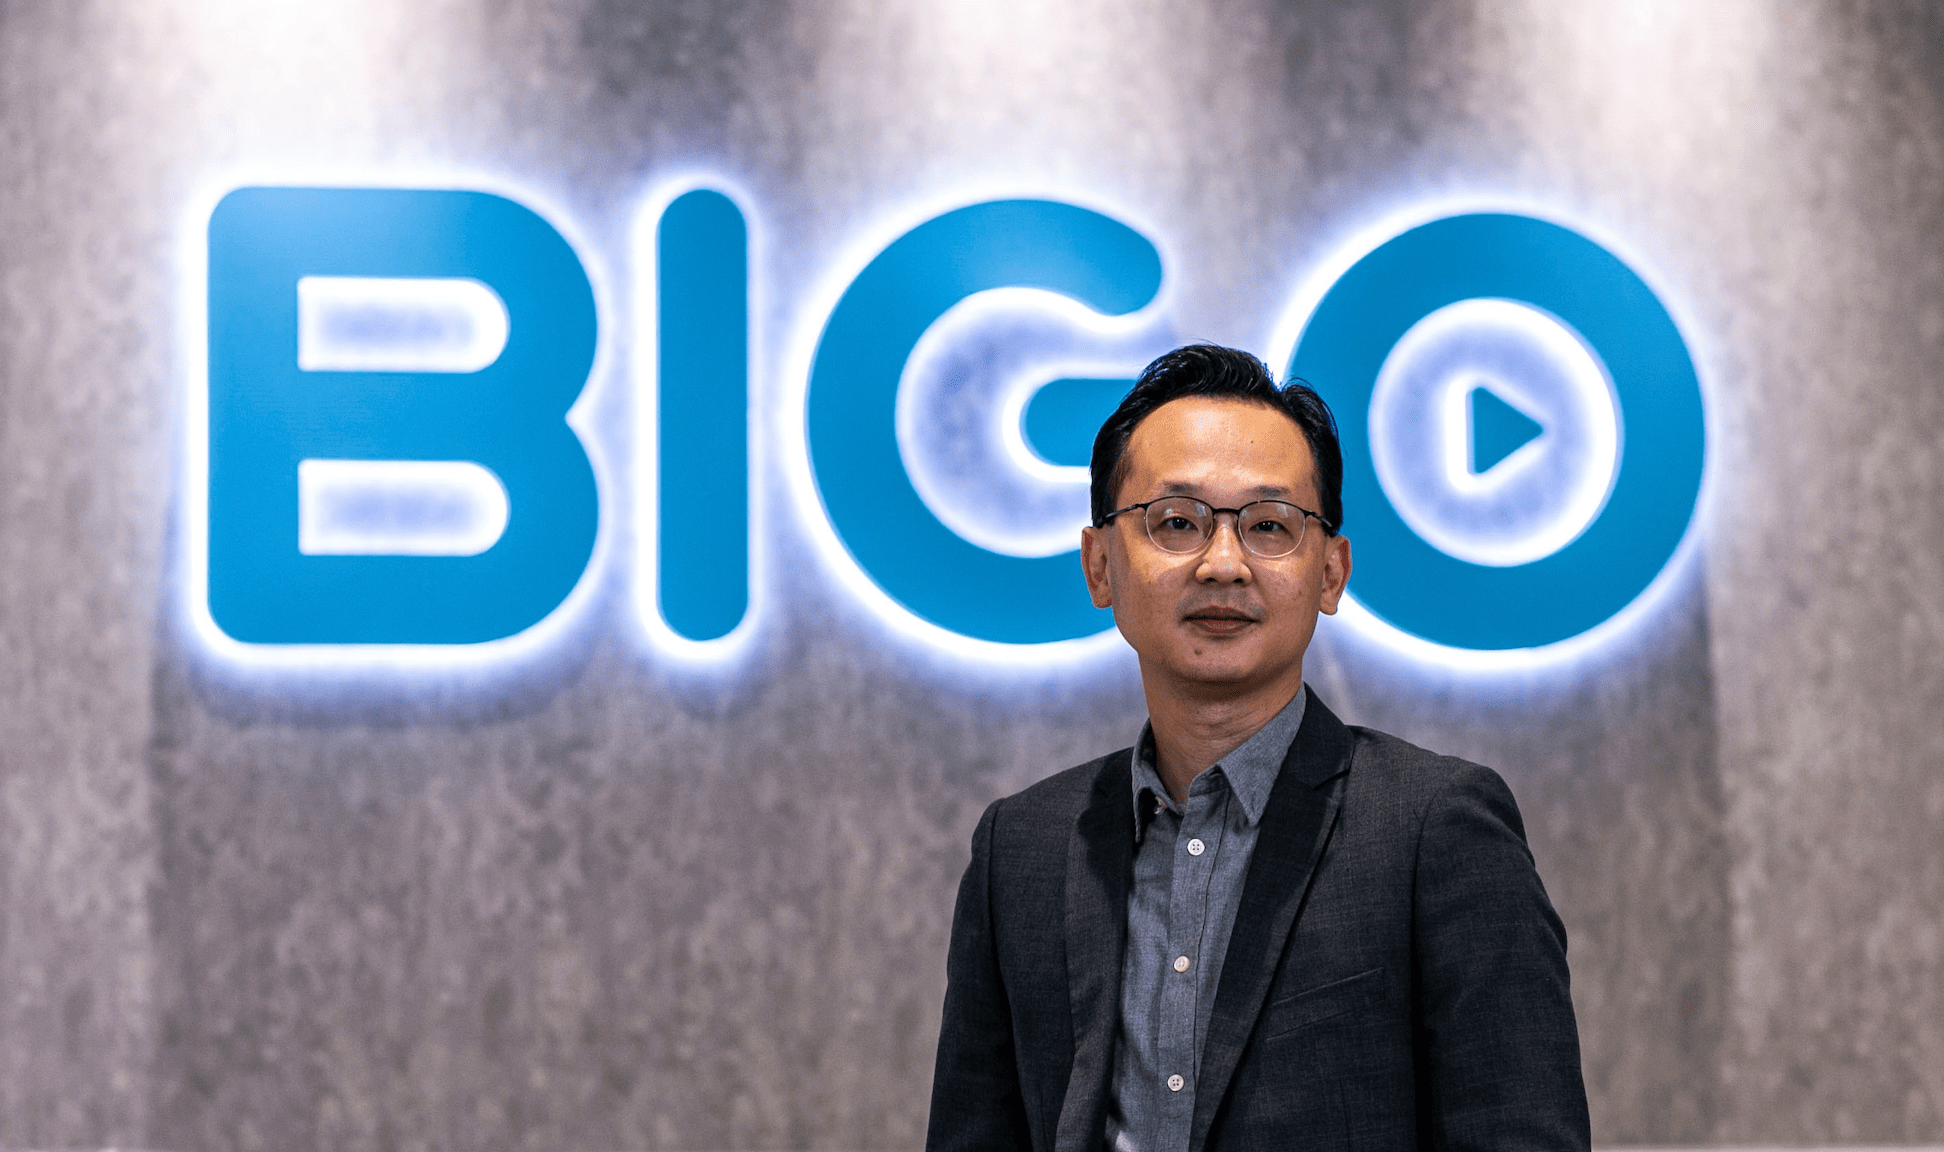 BIGO Technology sees strong growth as Web 3 fuels creator economy